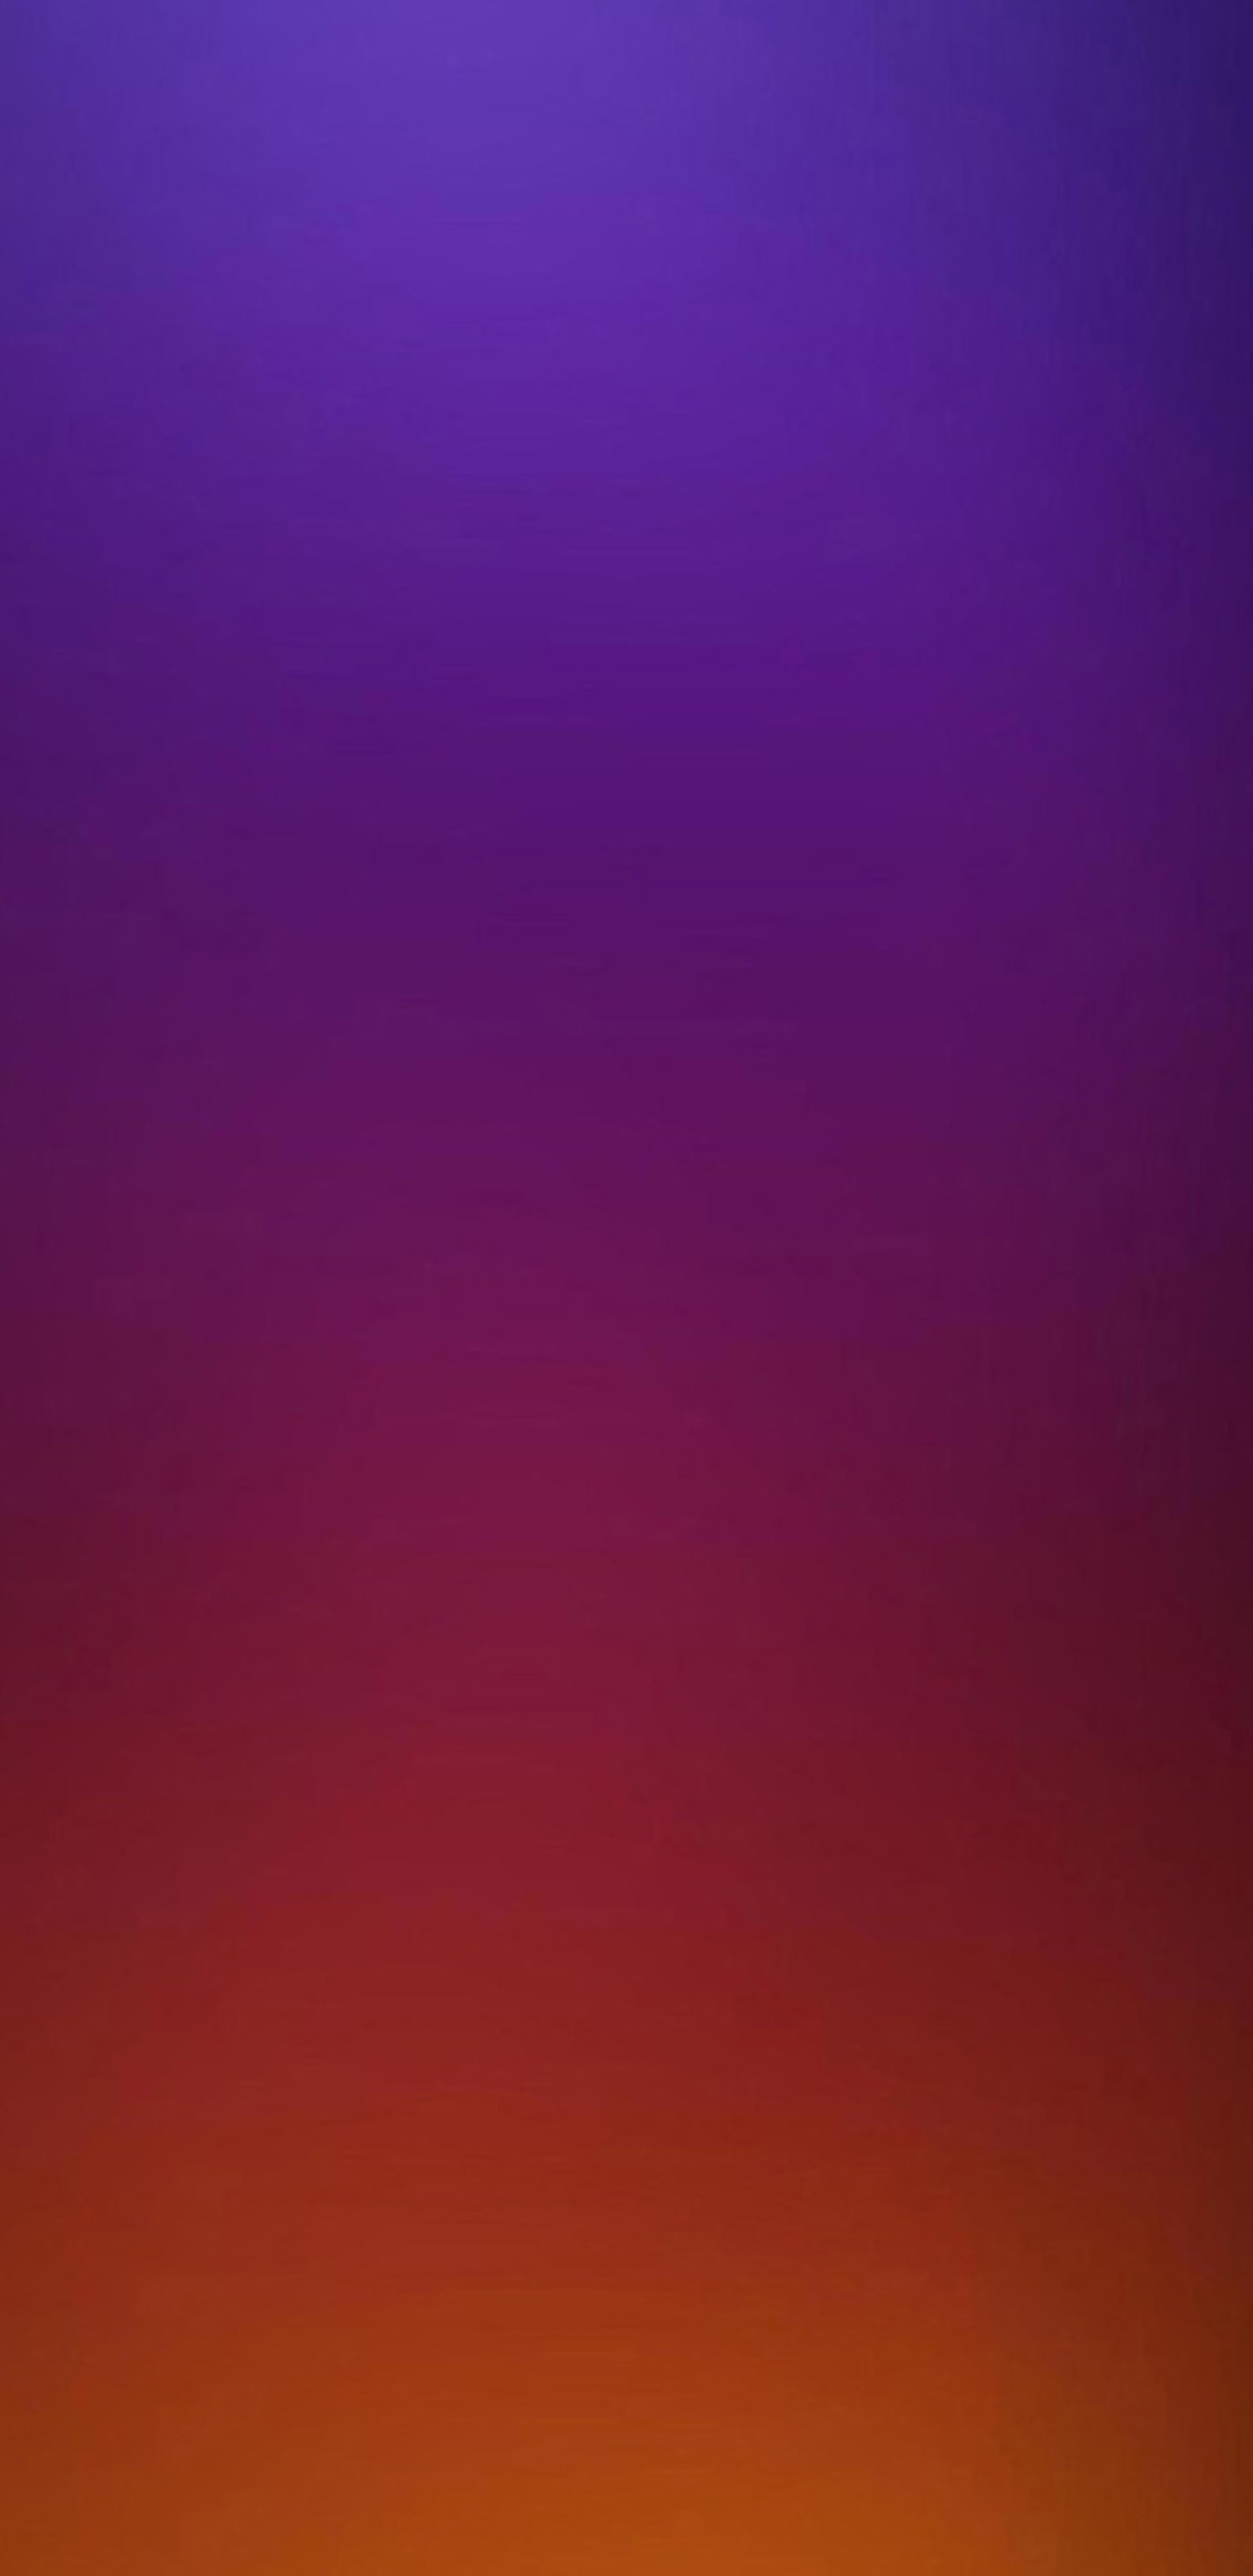 samsung galaxy s8 wallpaper,sky,violet,purple,blue,red